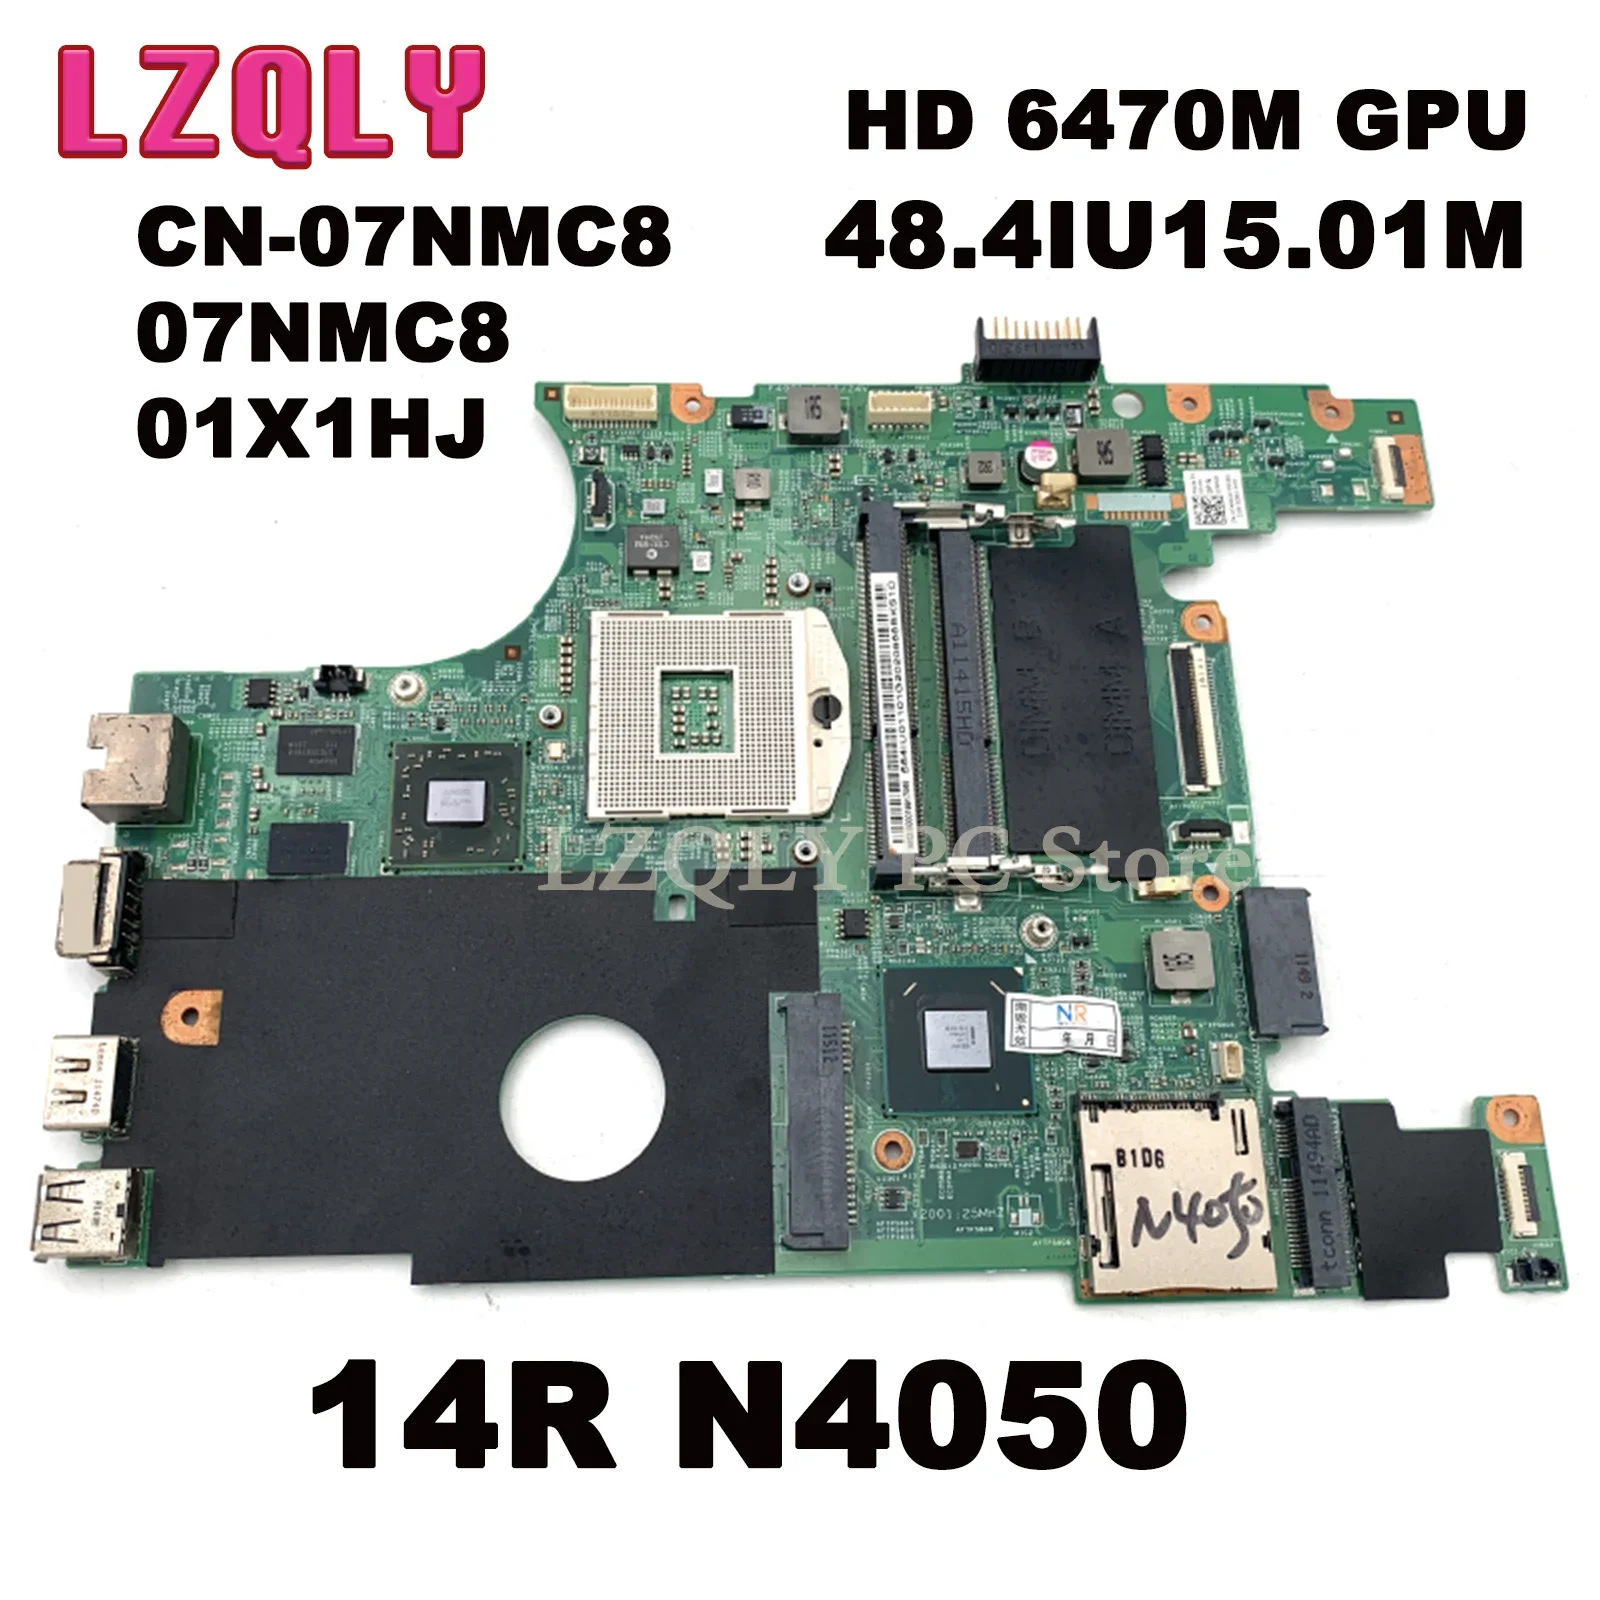 

Материнская плата LZQLY для ноутбука Dell Inspiron 14R N4050 CN-07NMC8 07NMC8 01X1HJ 488.415.01m, HD 6470M GPU HM67 DDR3, материнская плата